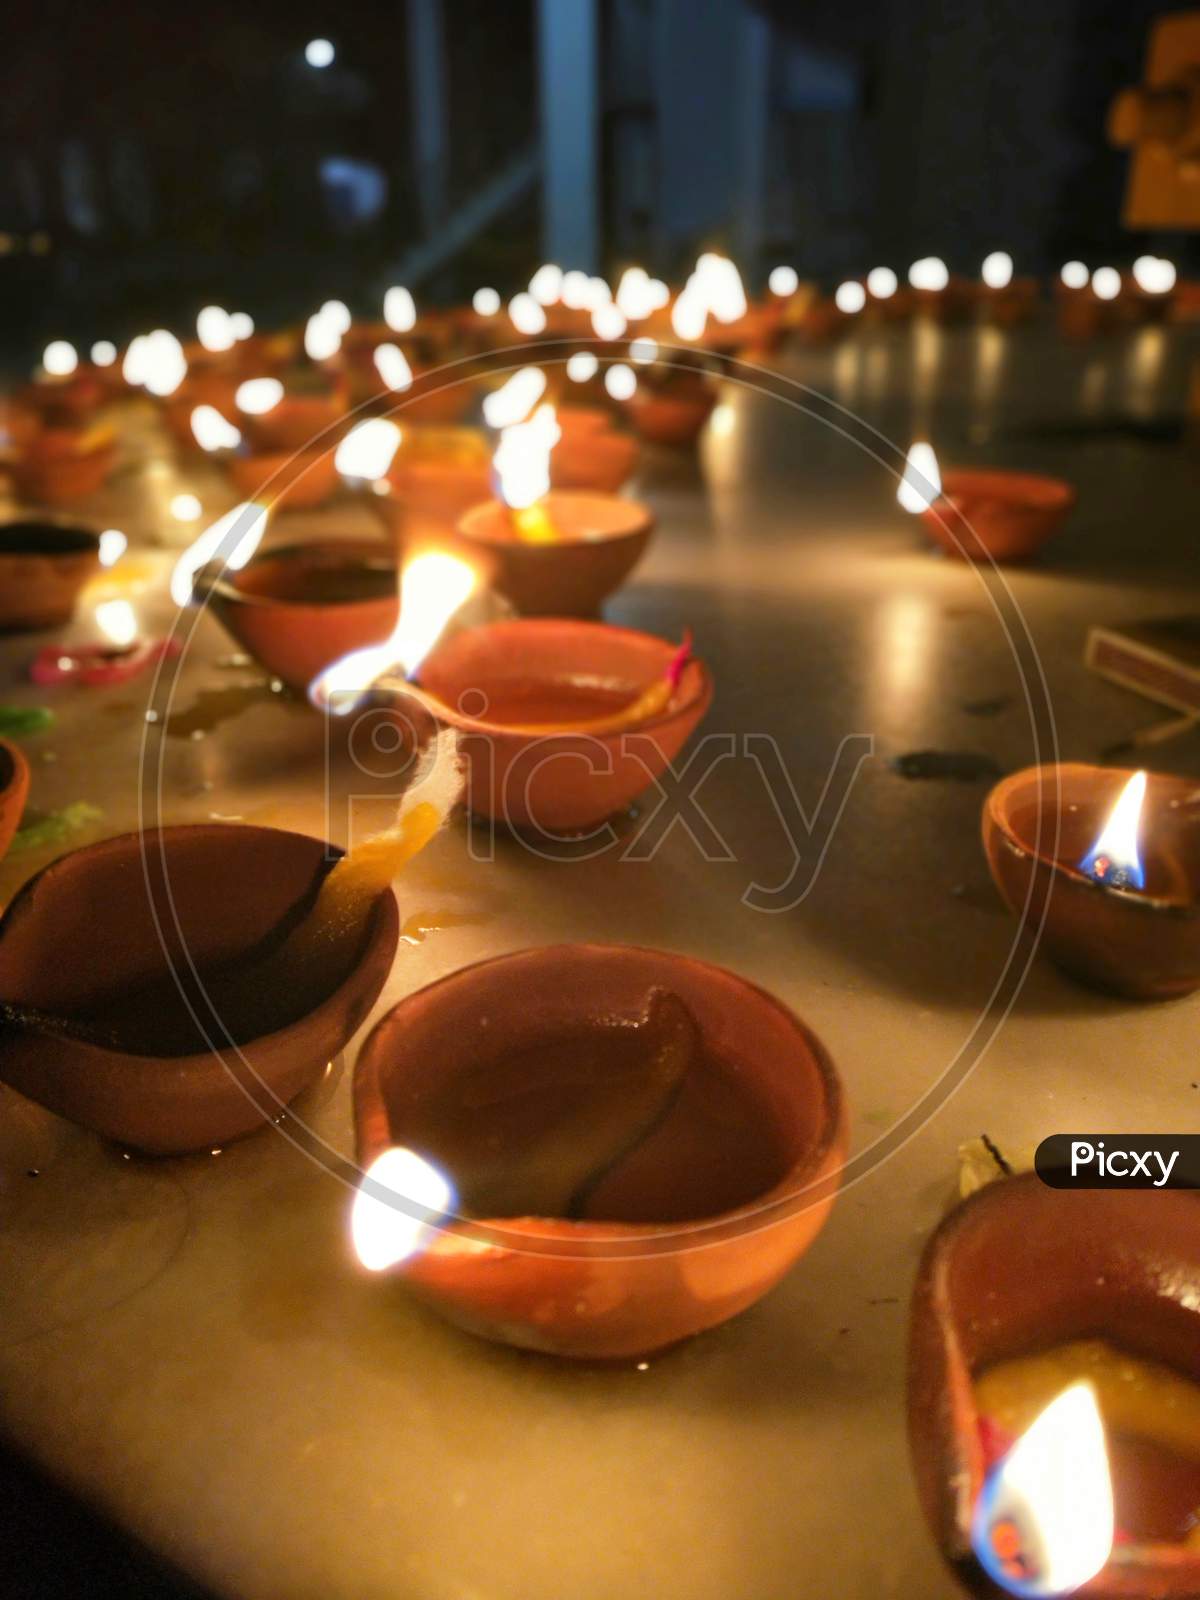 Some memories of Diwali